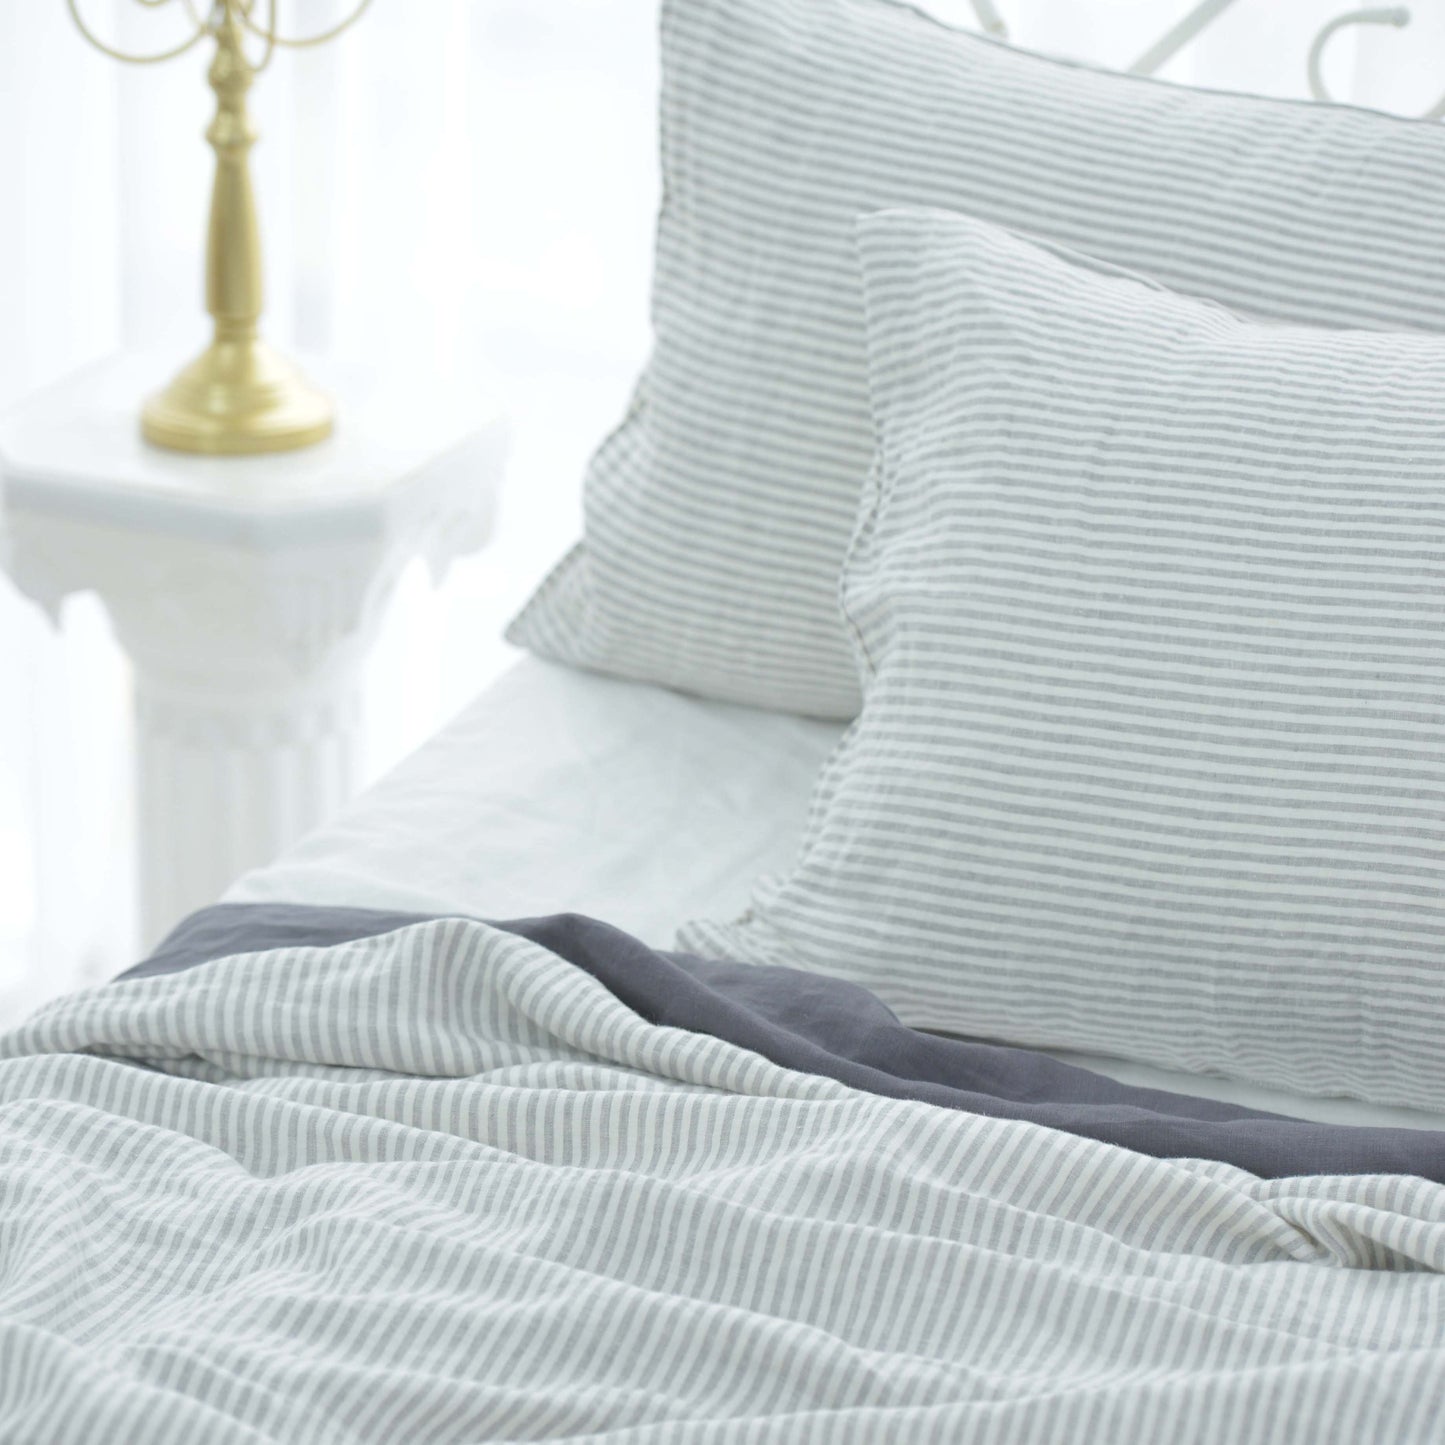 Striped French Linen Pillowcase - Yarn Dyeing 49